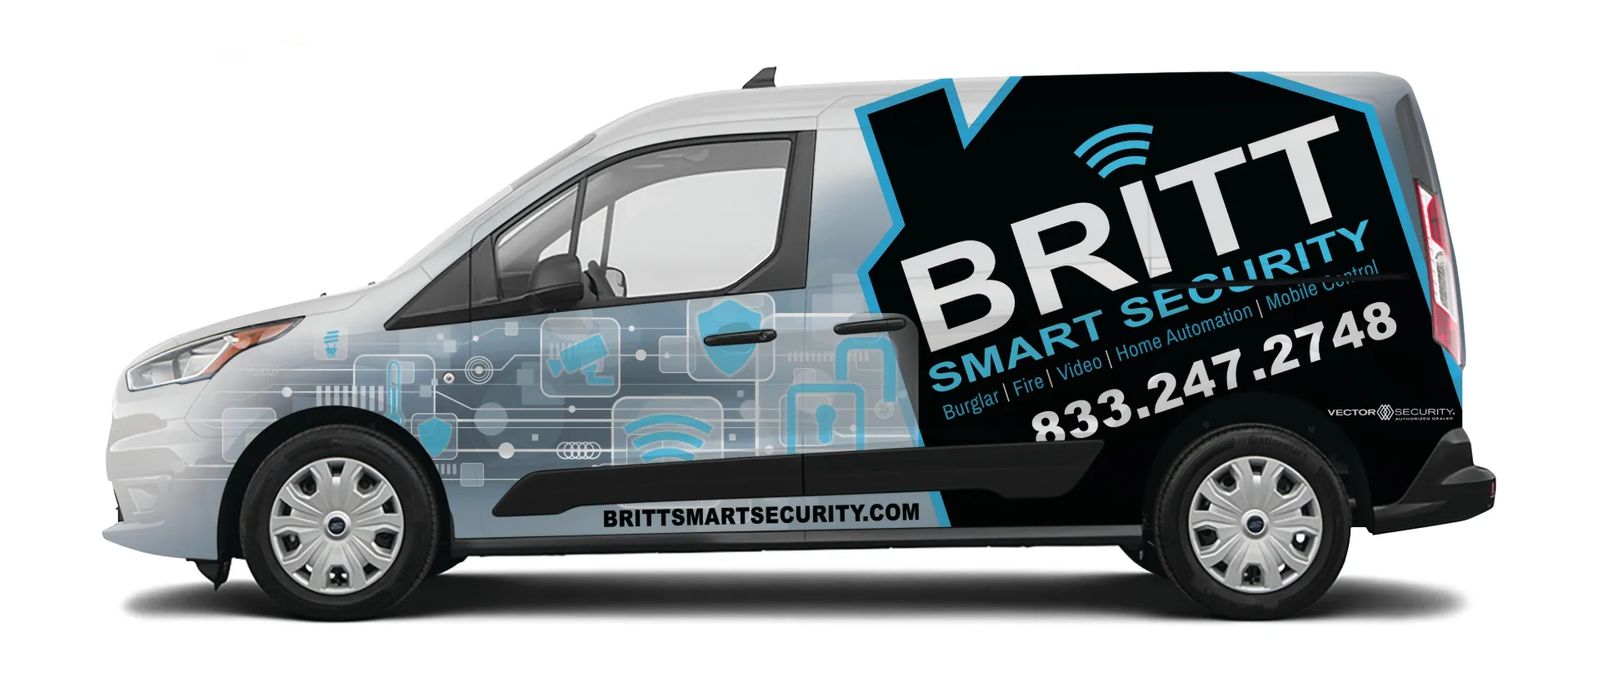 Britt Smart Security vehicle wrapp.